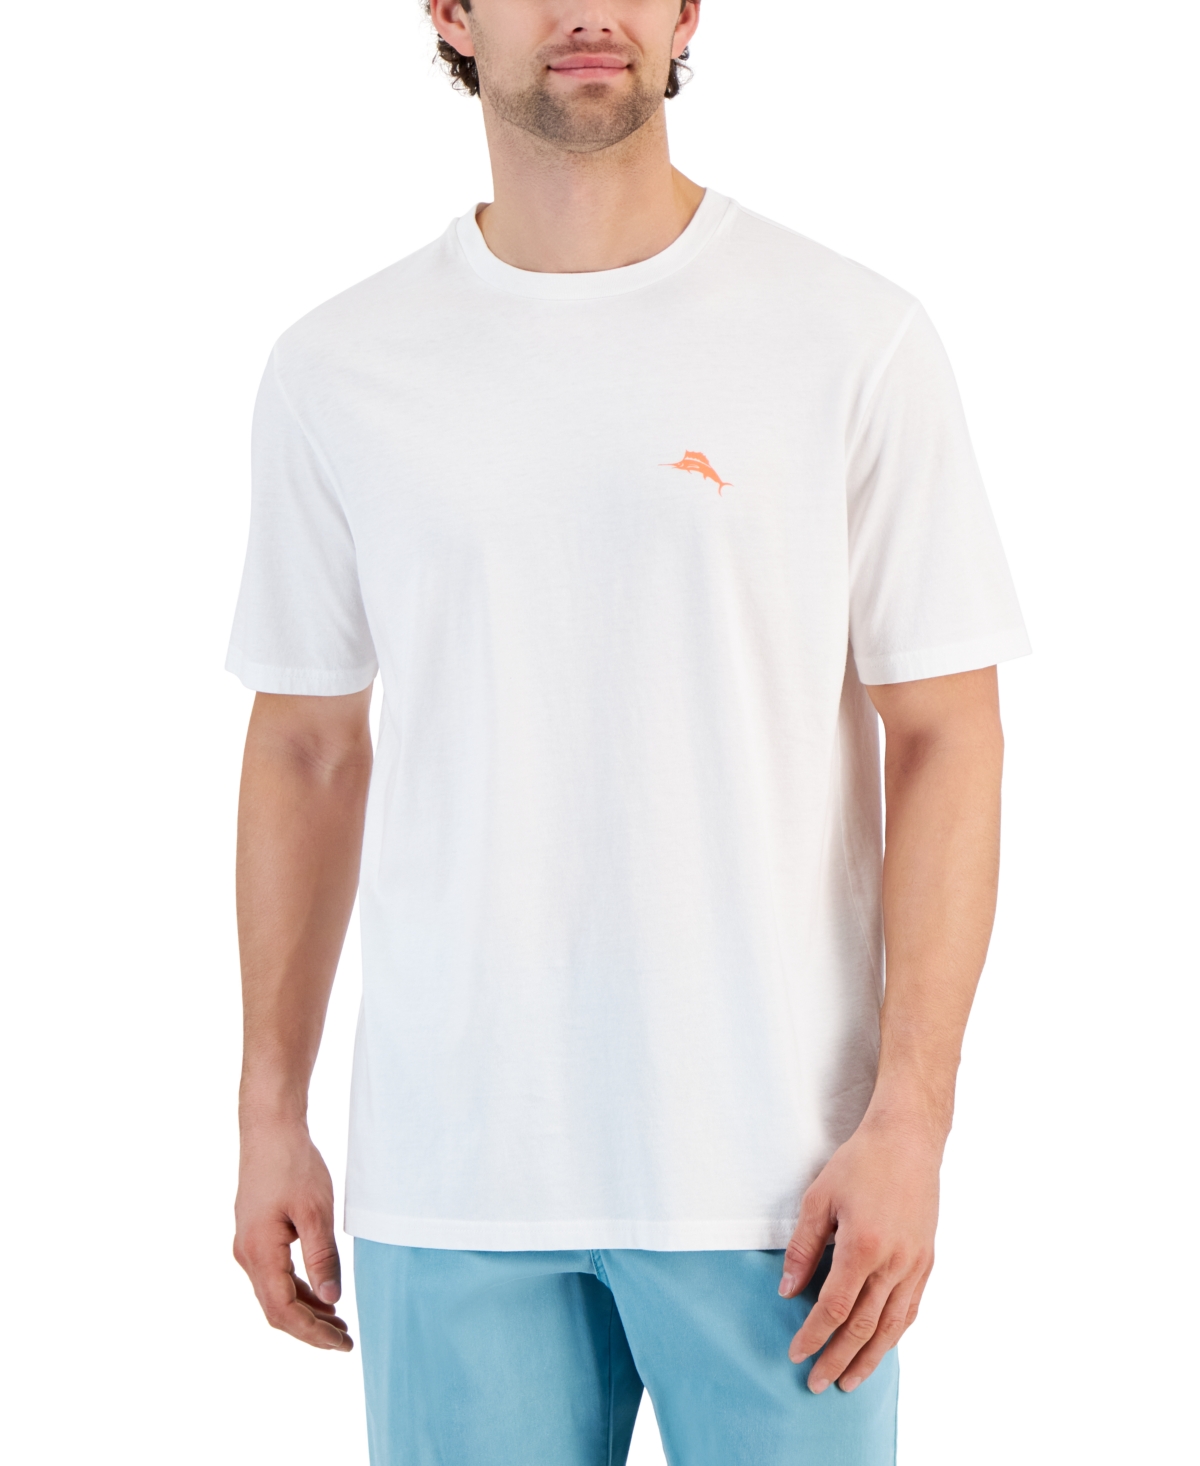 Men's Bainbridge Match Graphic T-Shirt - White